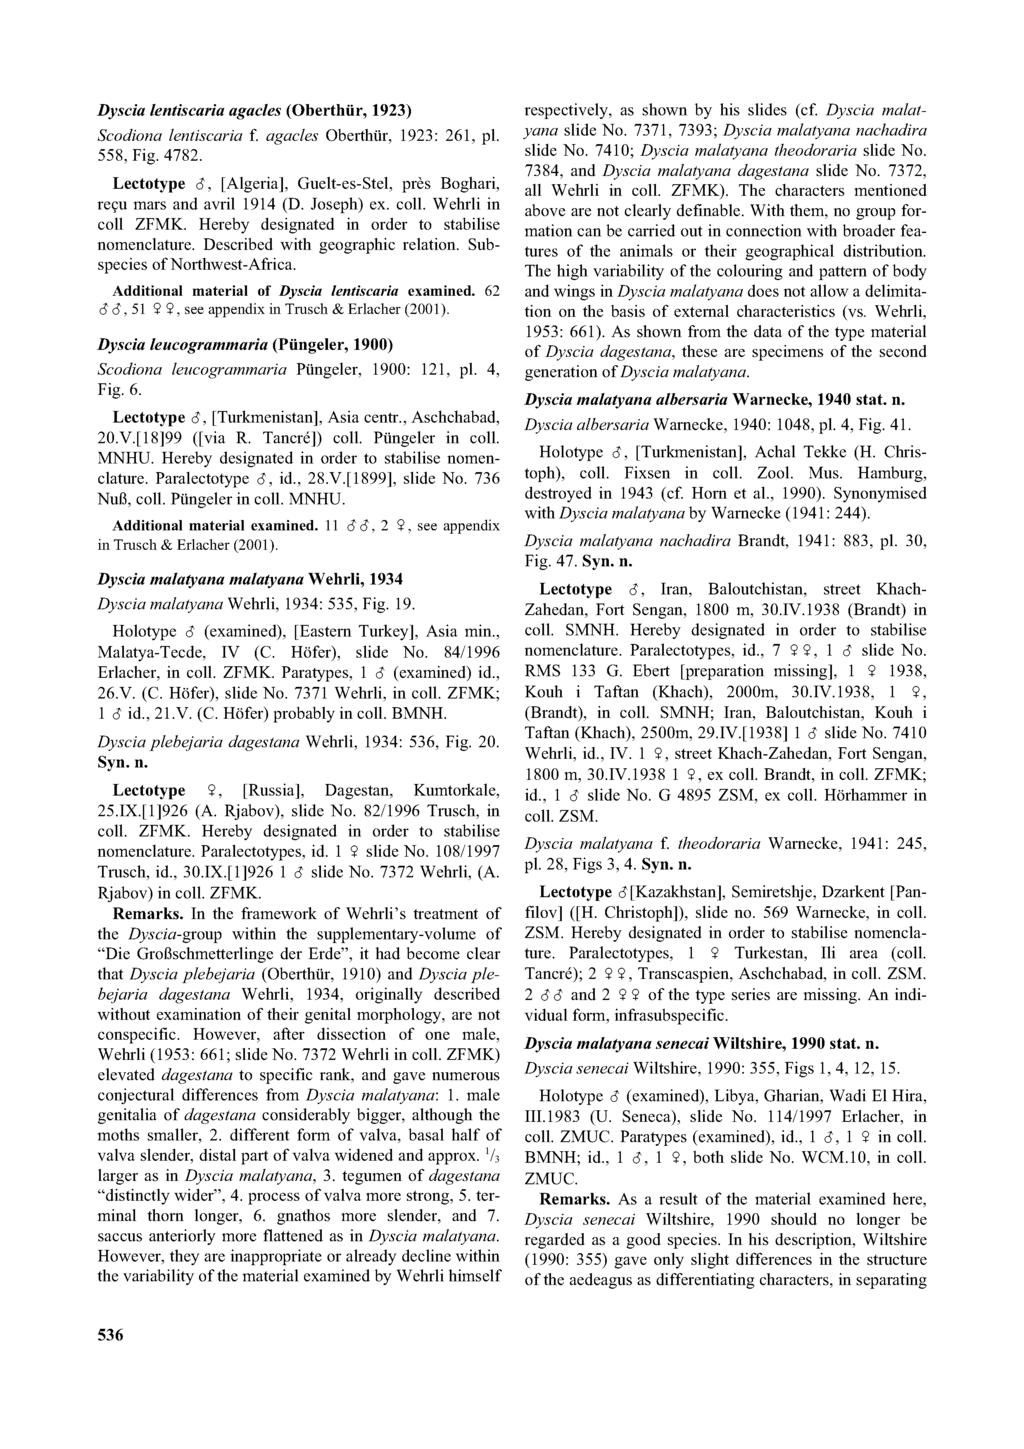 Dyscia lentiscaria agacles (Oberthür, 1923) Scodiona lentiscaria f. agacles Oberthür, 1923: 261, pi. 558, Fig. 4782. Lectotype k, [Algeria], Gueit-es-Stei, près Boghari, reçu mars and avril 1914 (D.